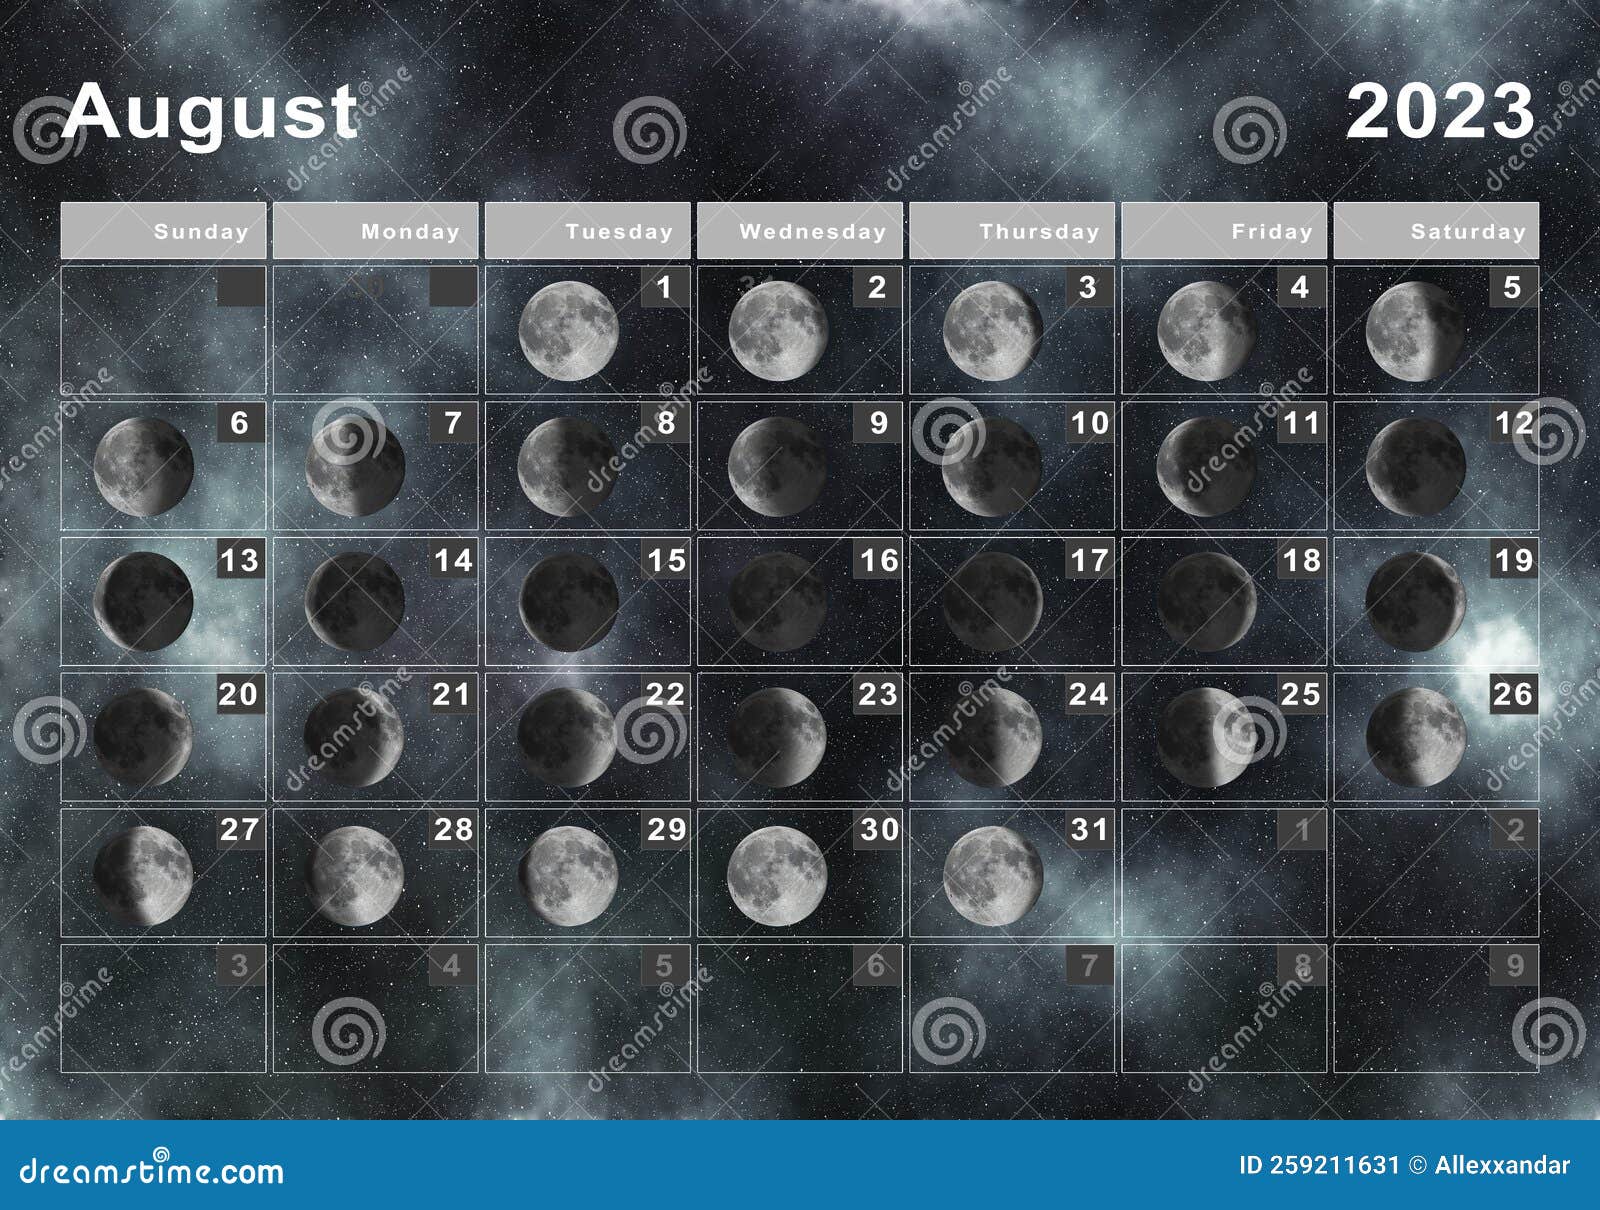 August 2023 Lunar Calendar, Moon Cycles Stock Illustration ...